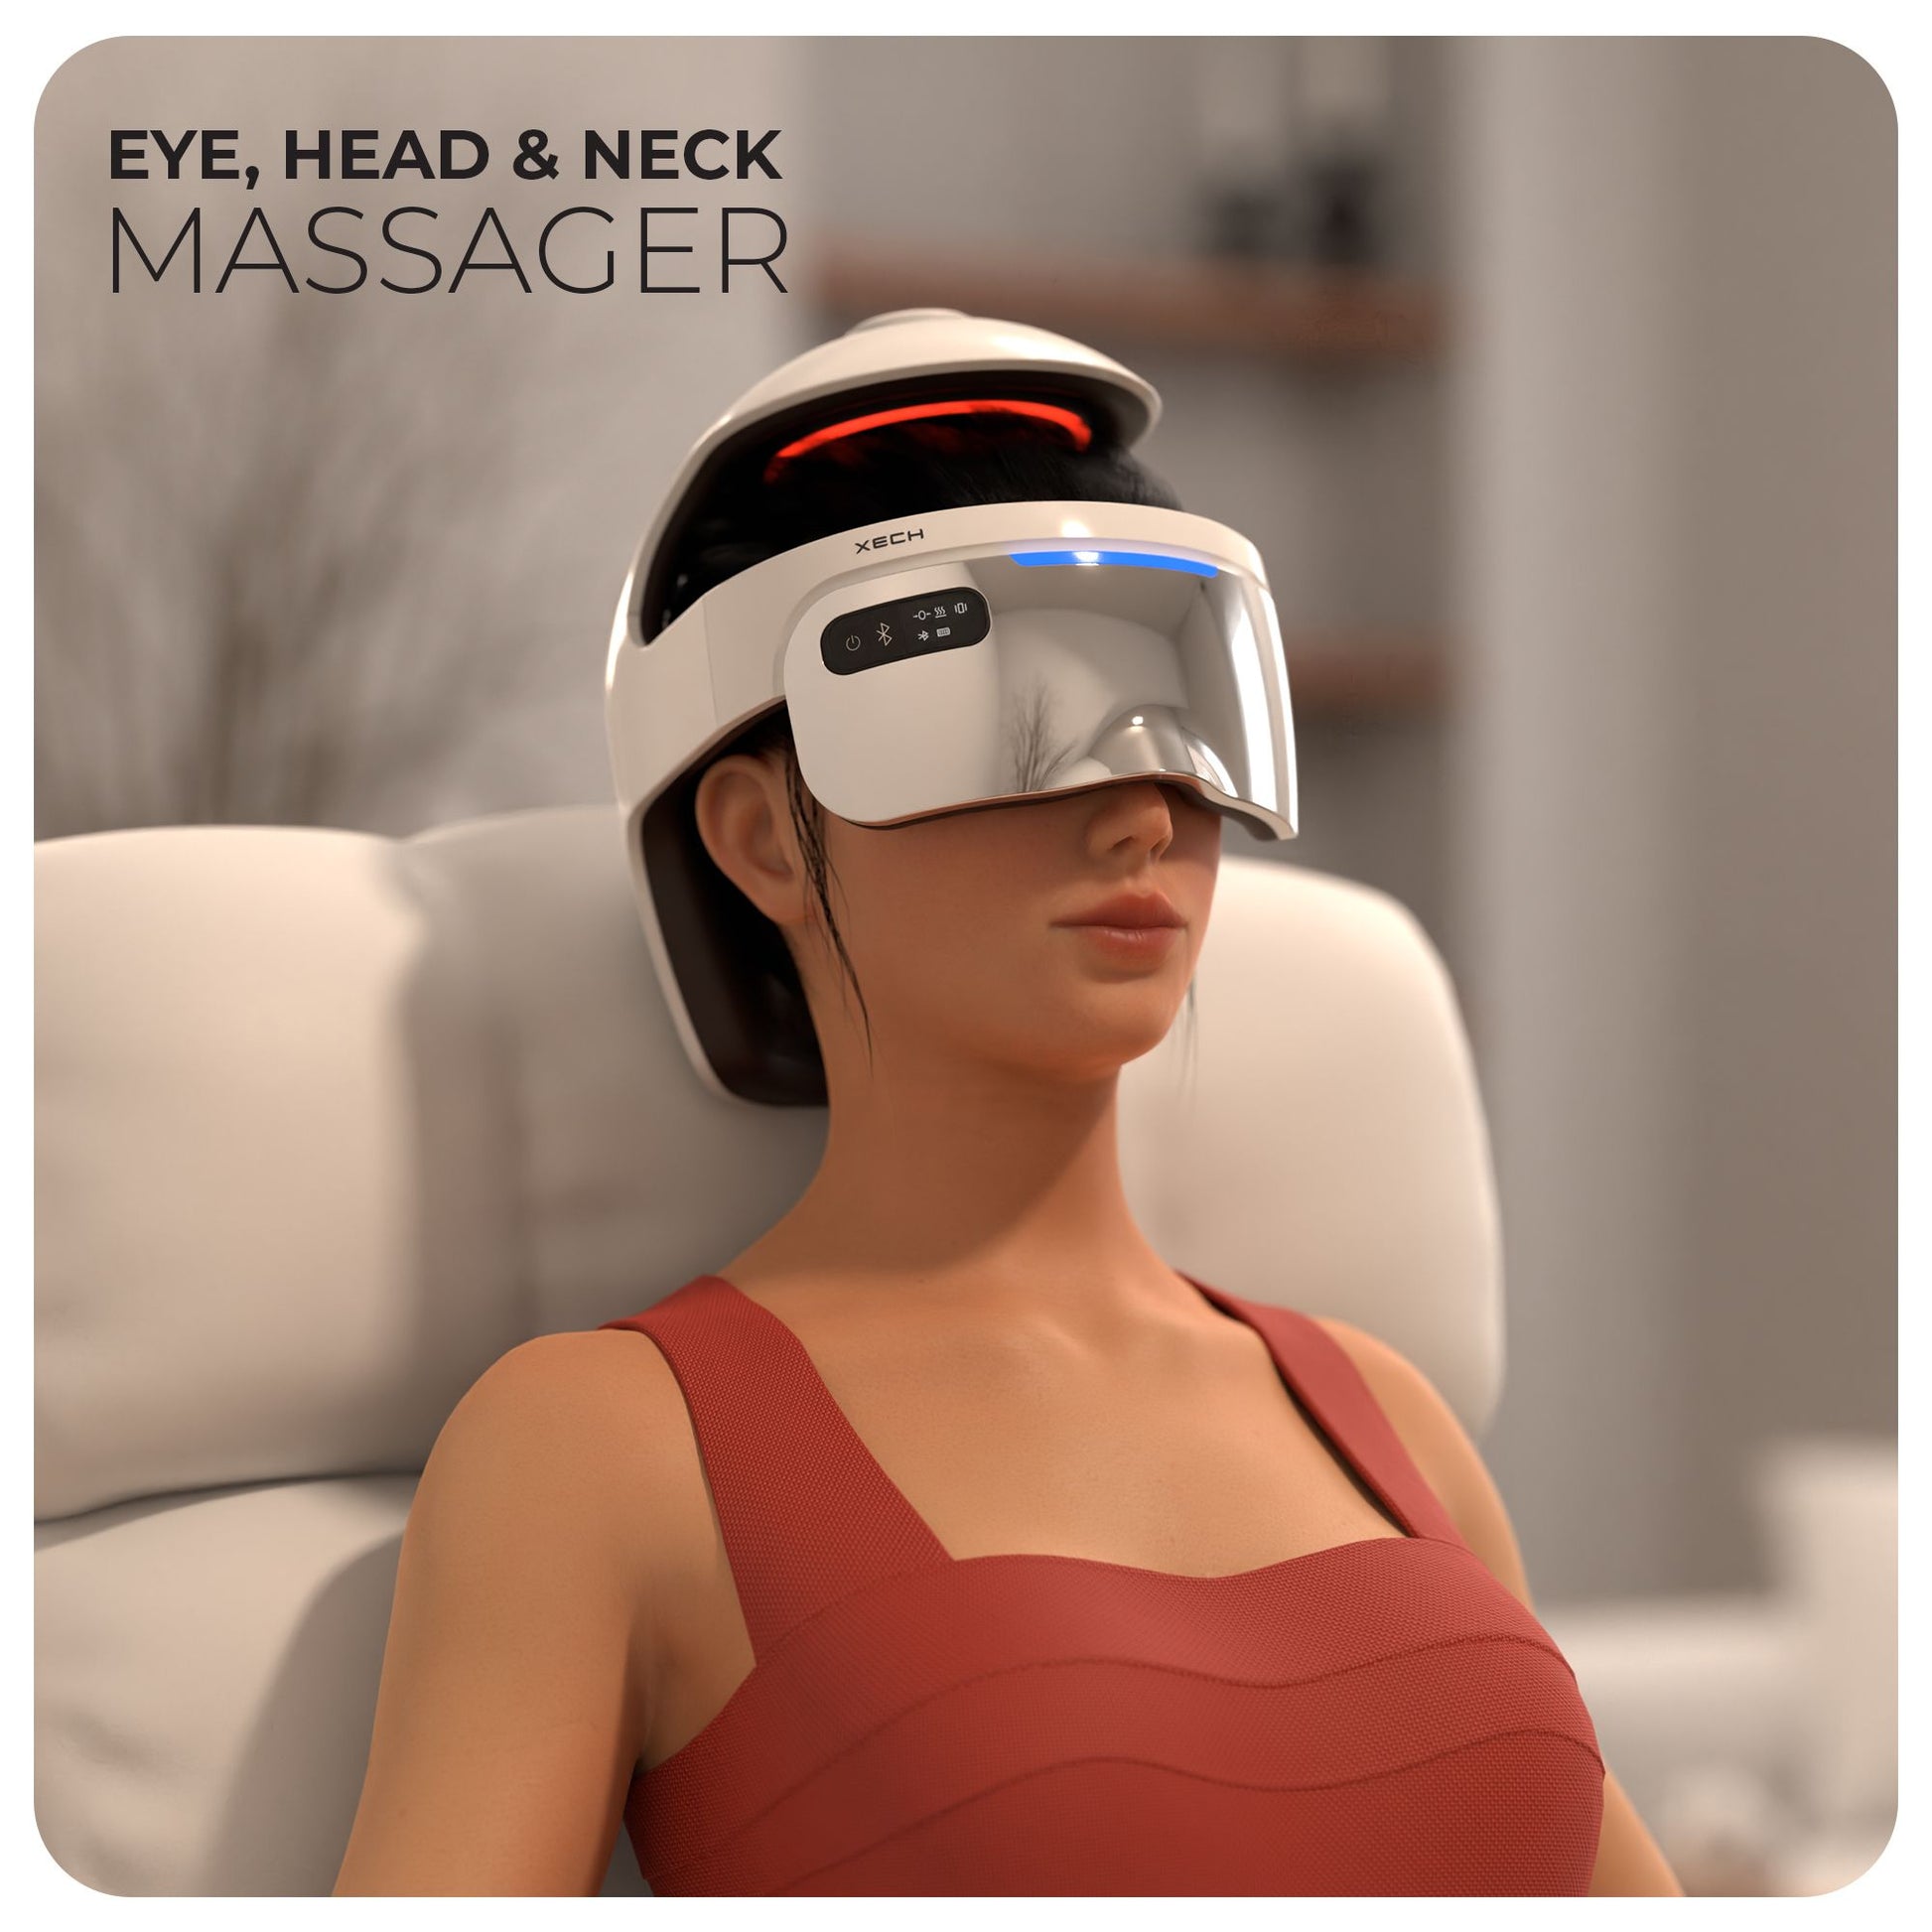 XECH-neck-head-and-eye-massaging-machine-for-women-and-men-cerebro